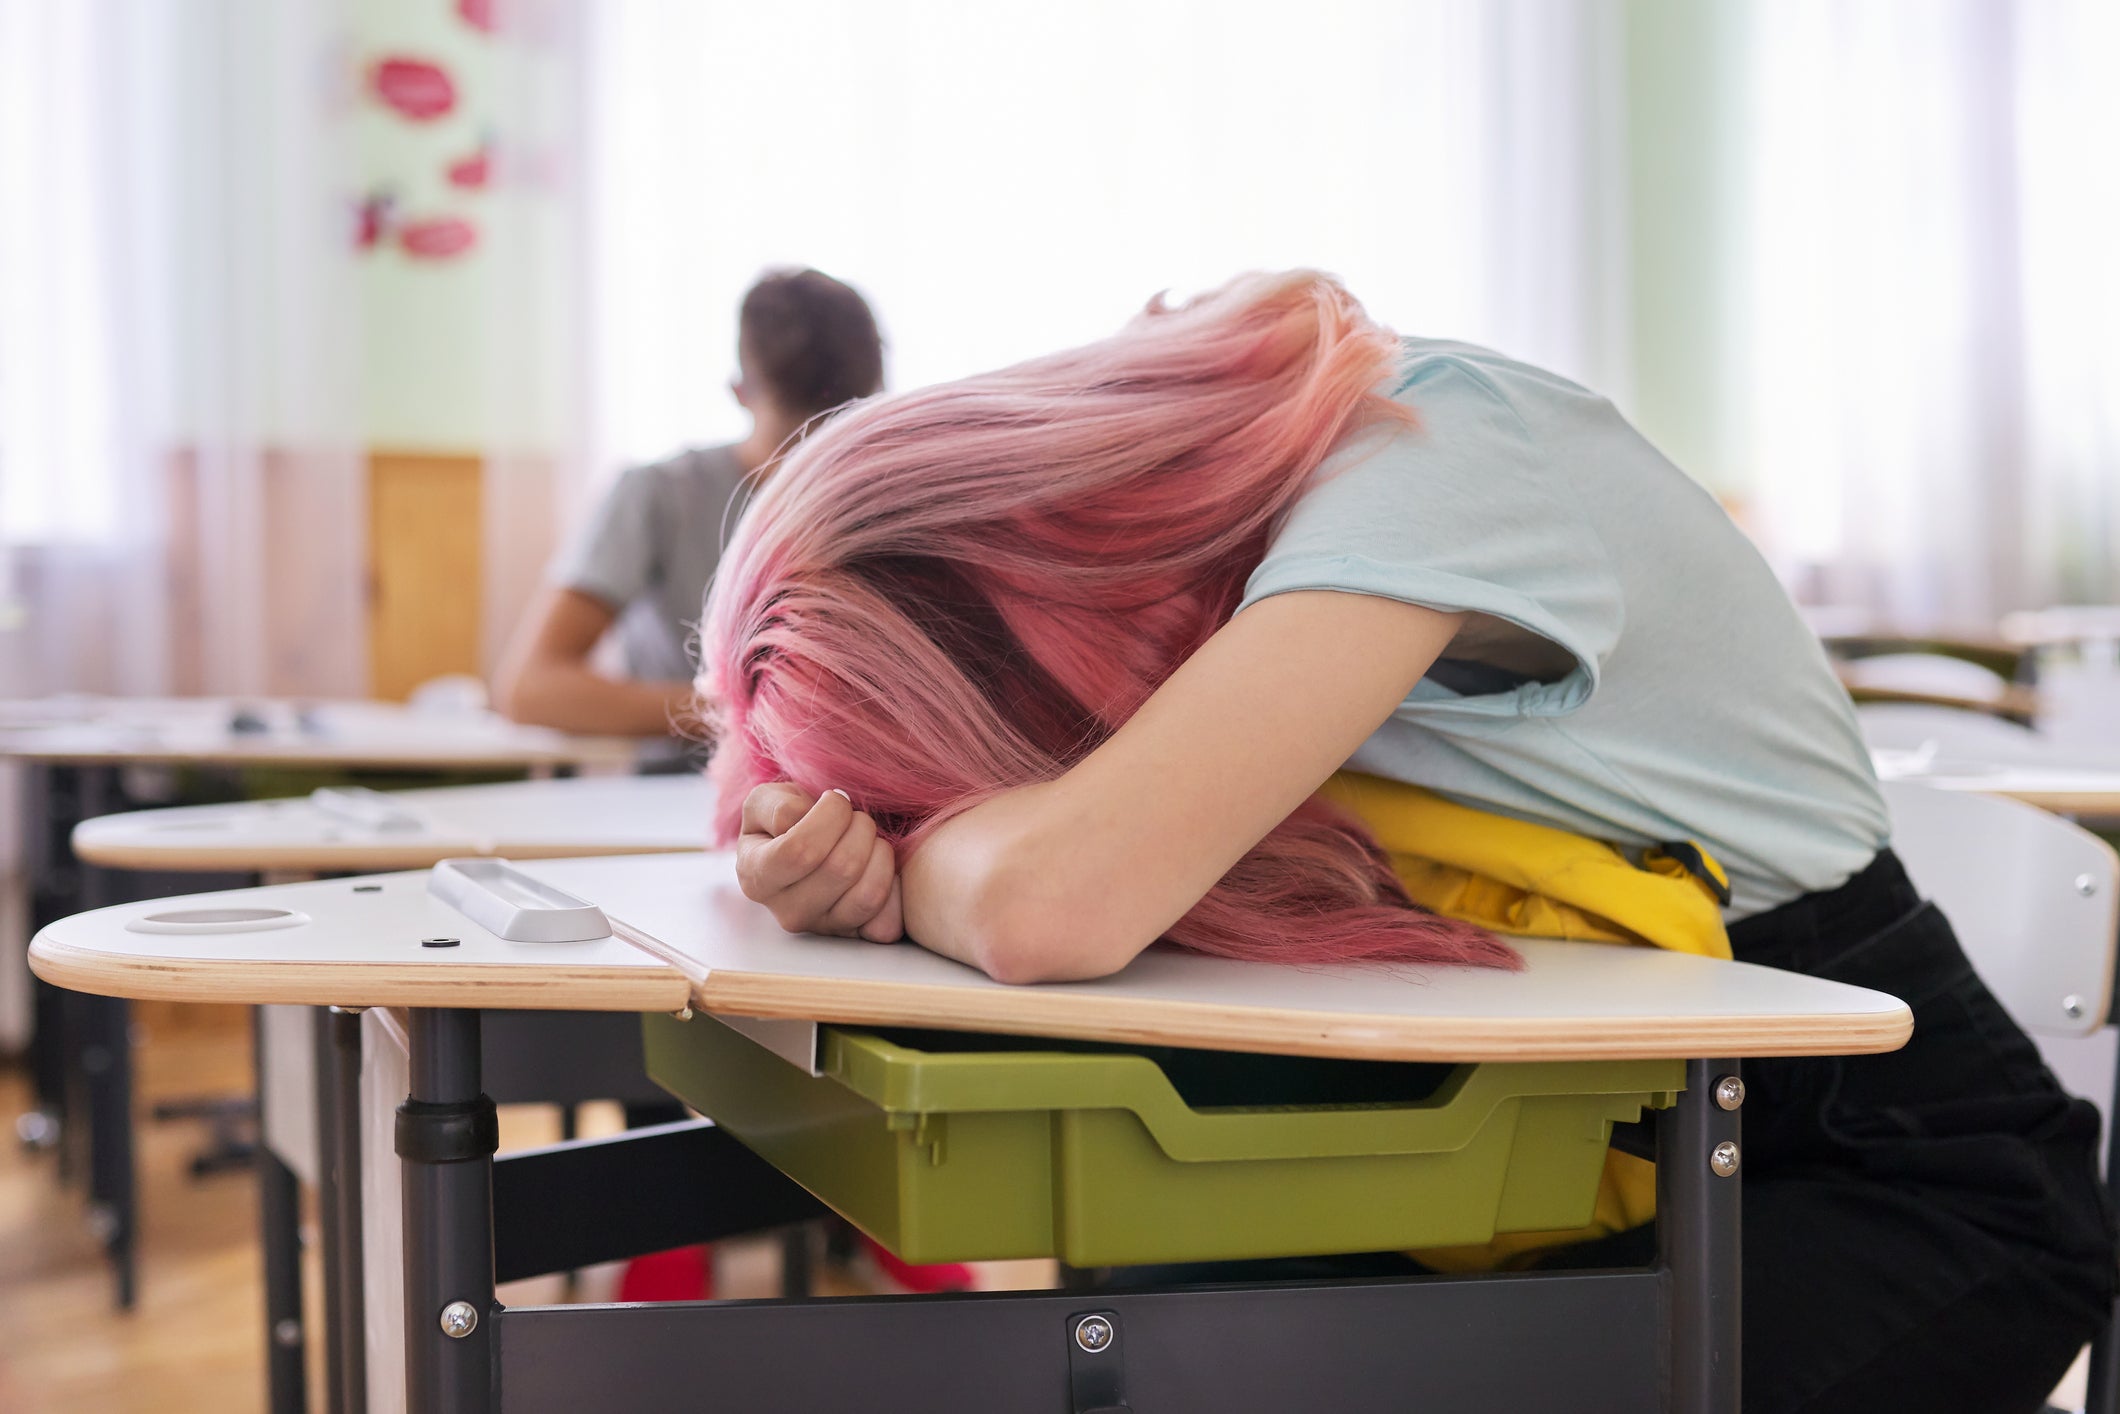 Exams + sleep + energy drinks = teenage nightmare